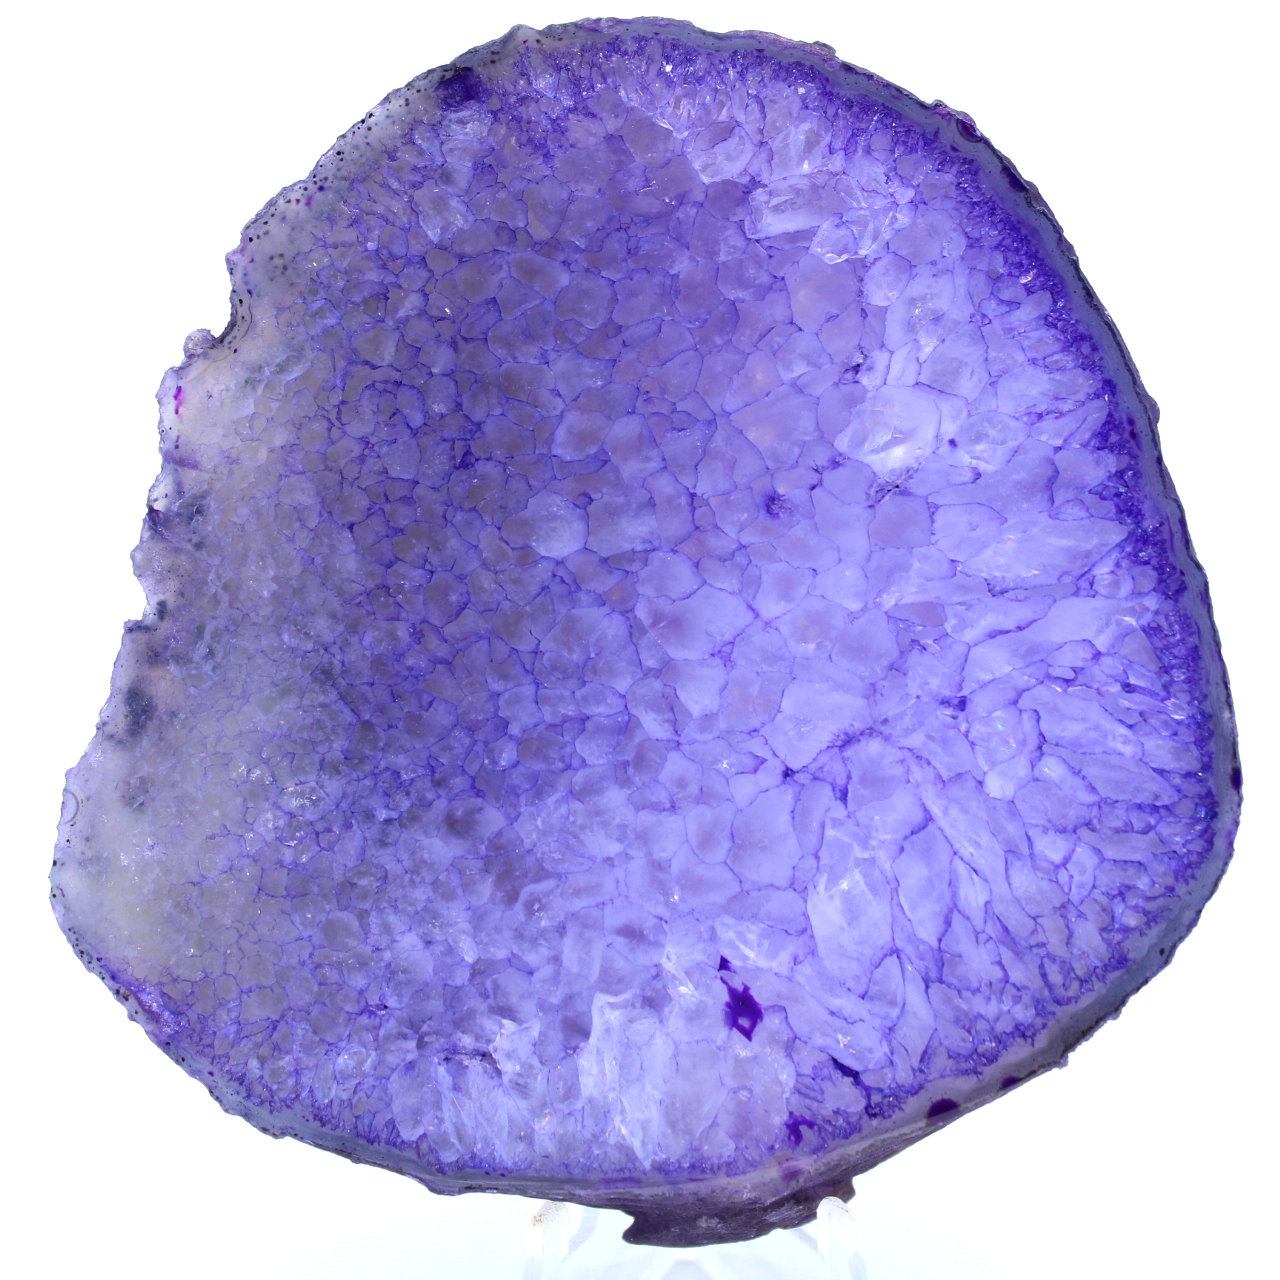 purple agate